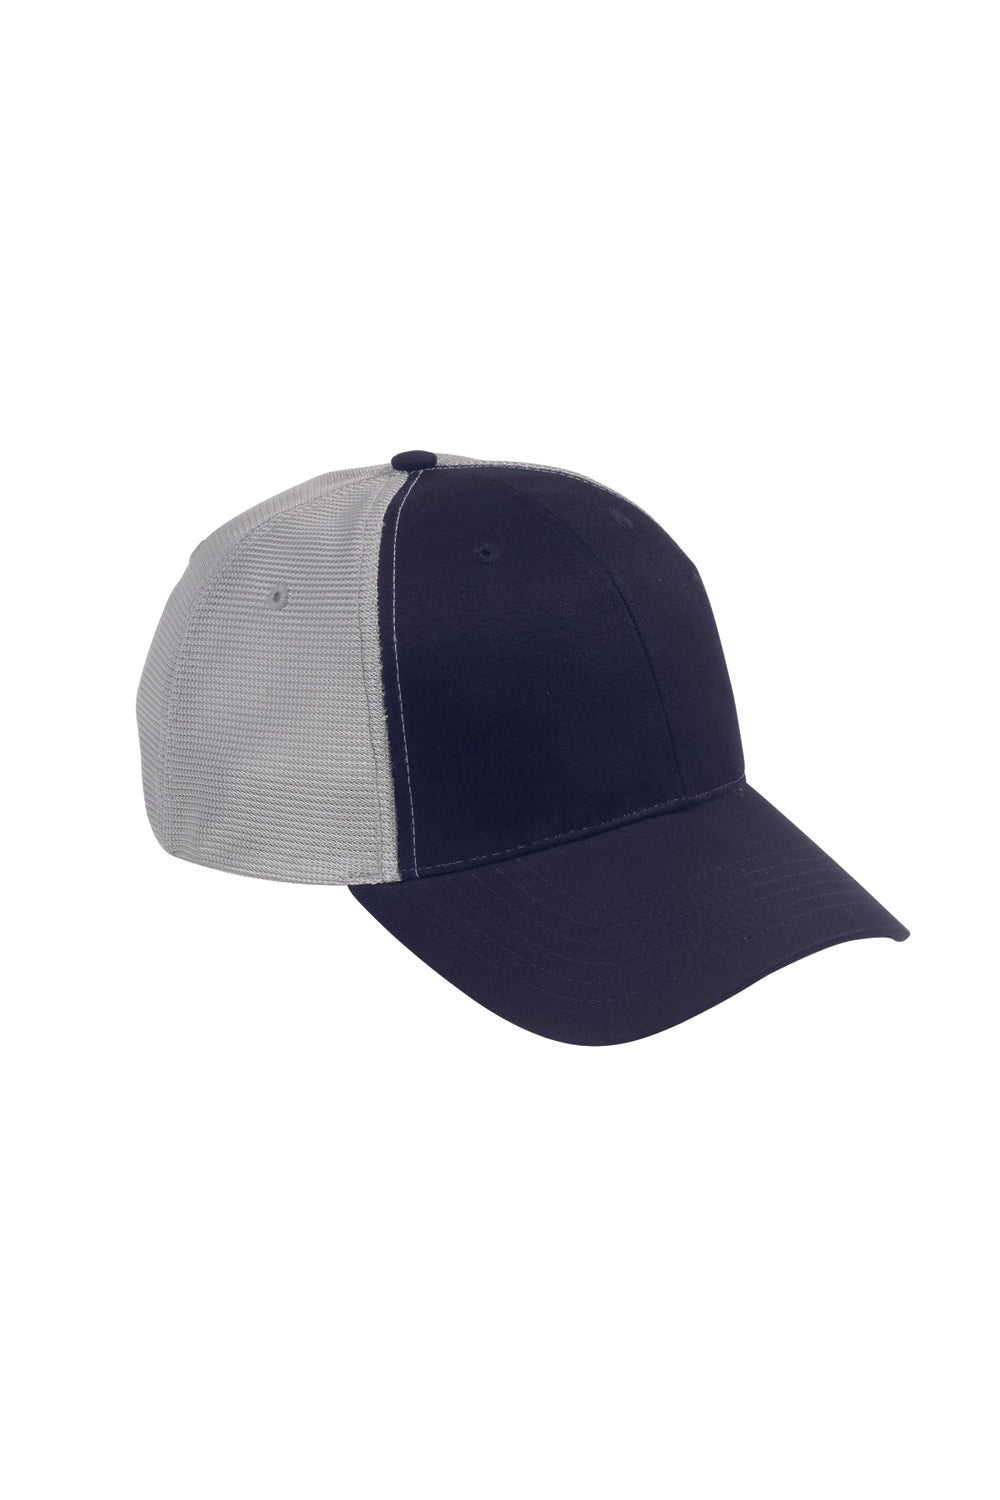 Big Accessories OSTM Mens Old School Adjustable Hat Navy Blue/Grey Front